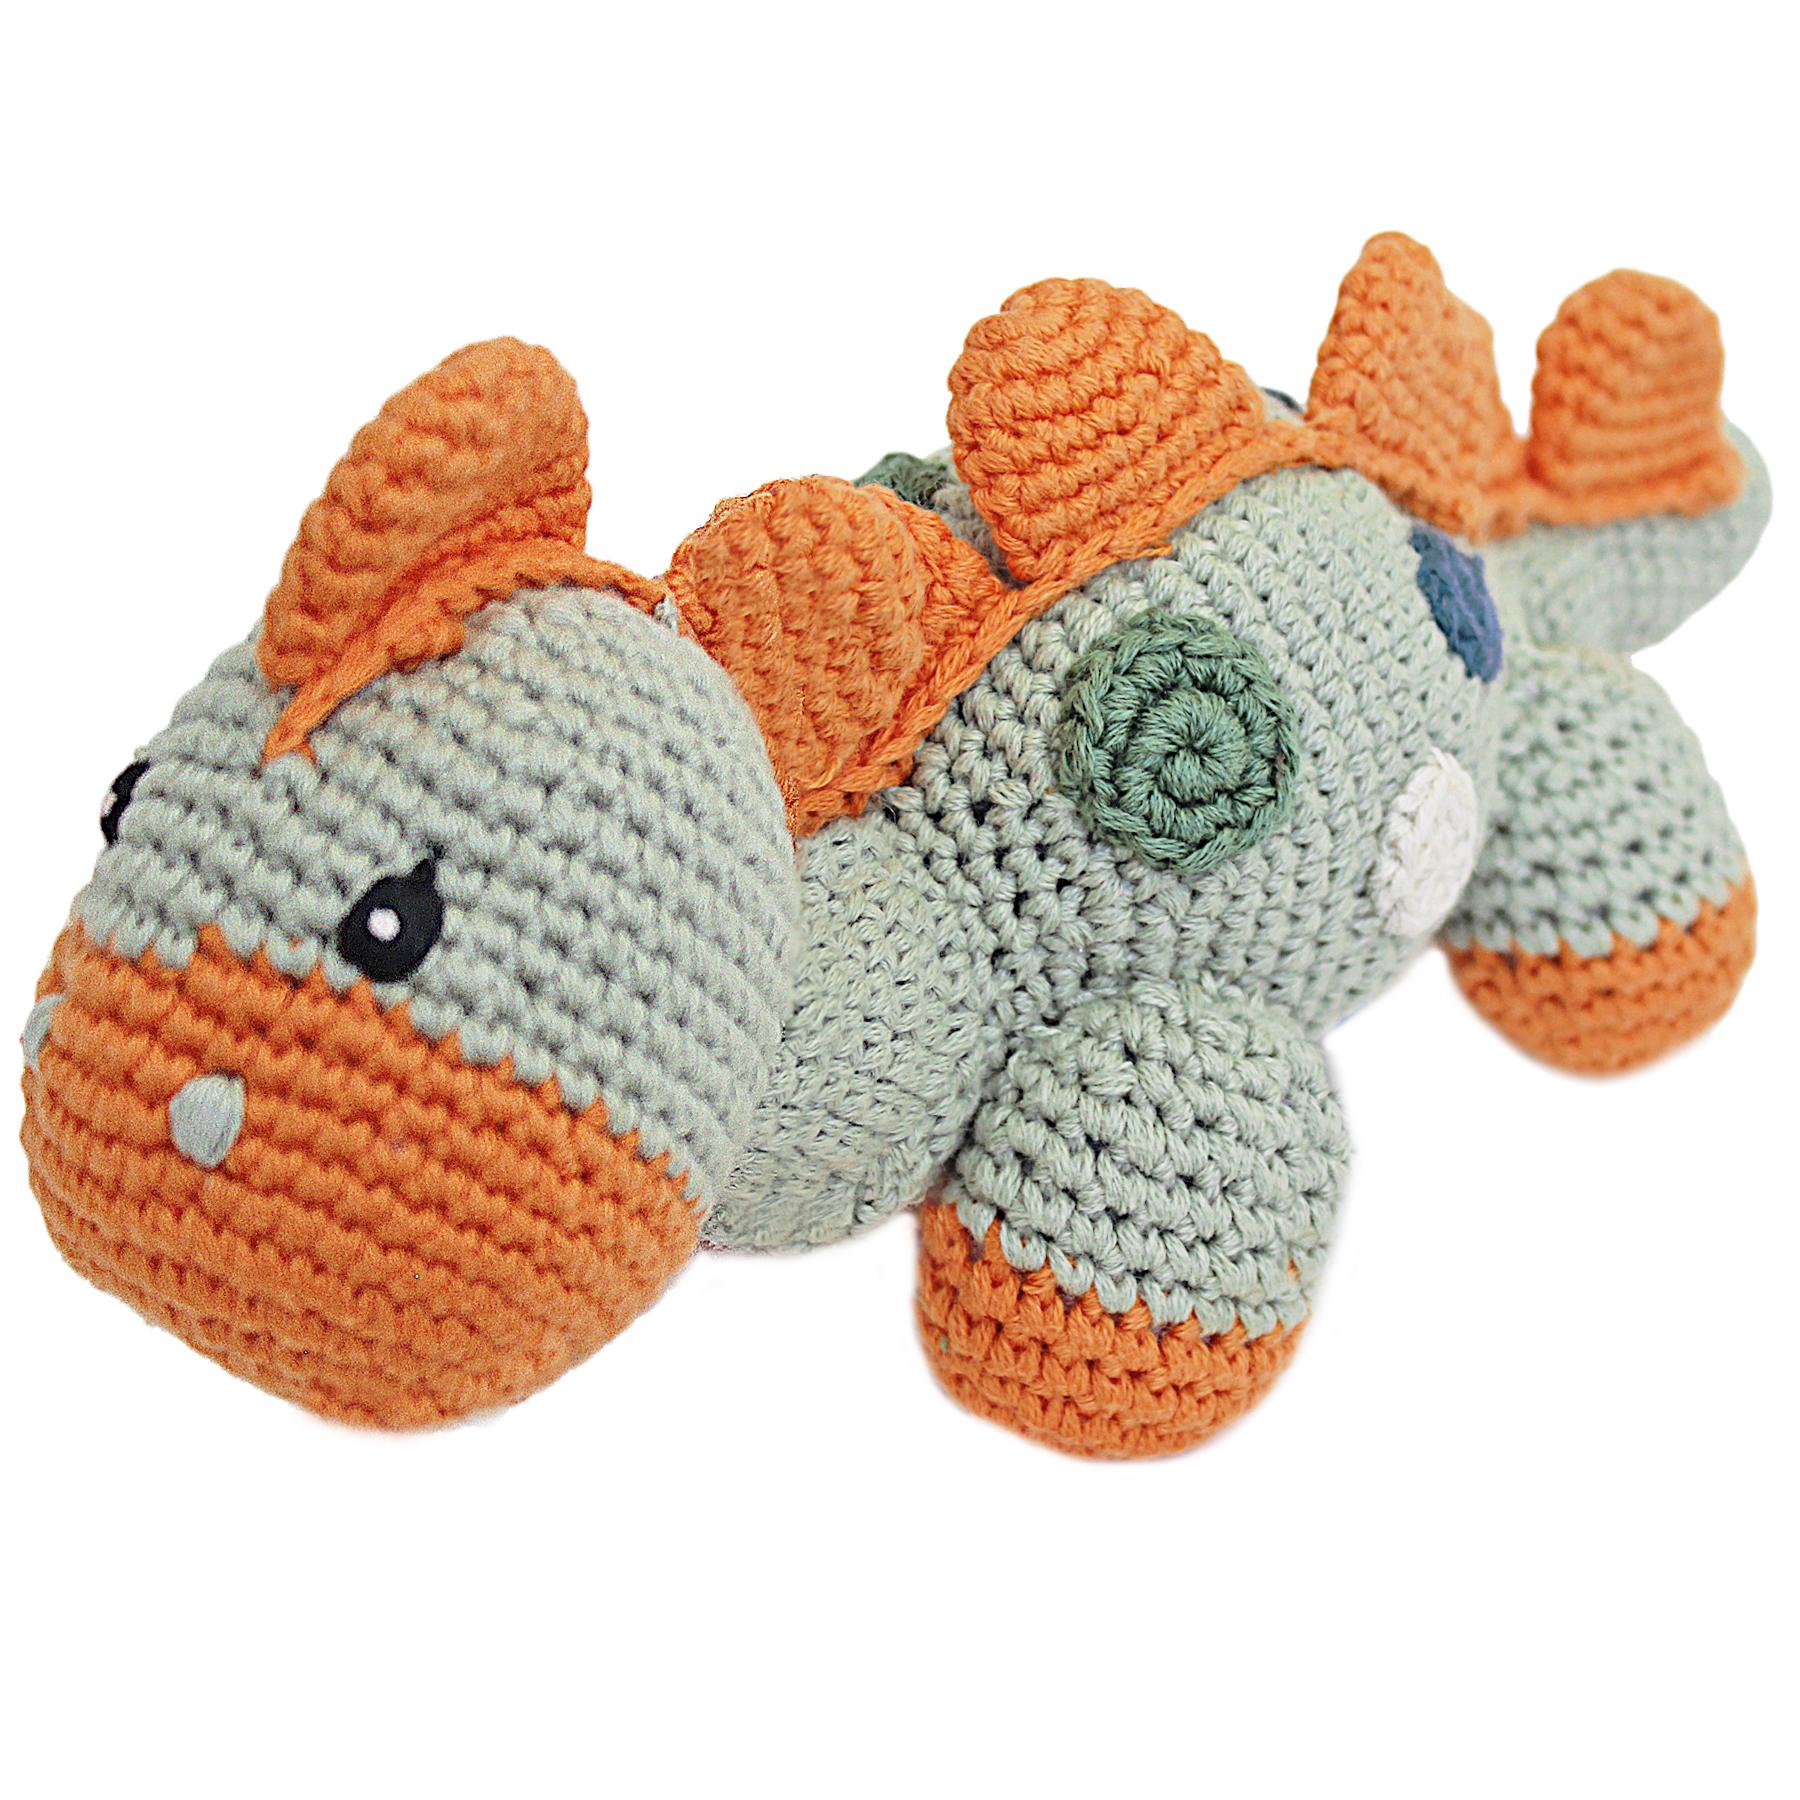 Pebble Fair Trade Crochet Teal Steggi Dinosaur Rattle